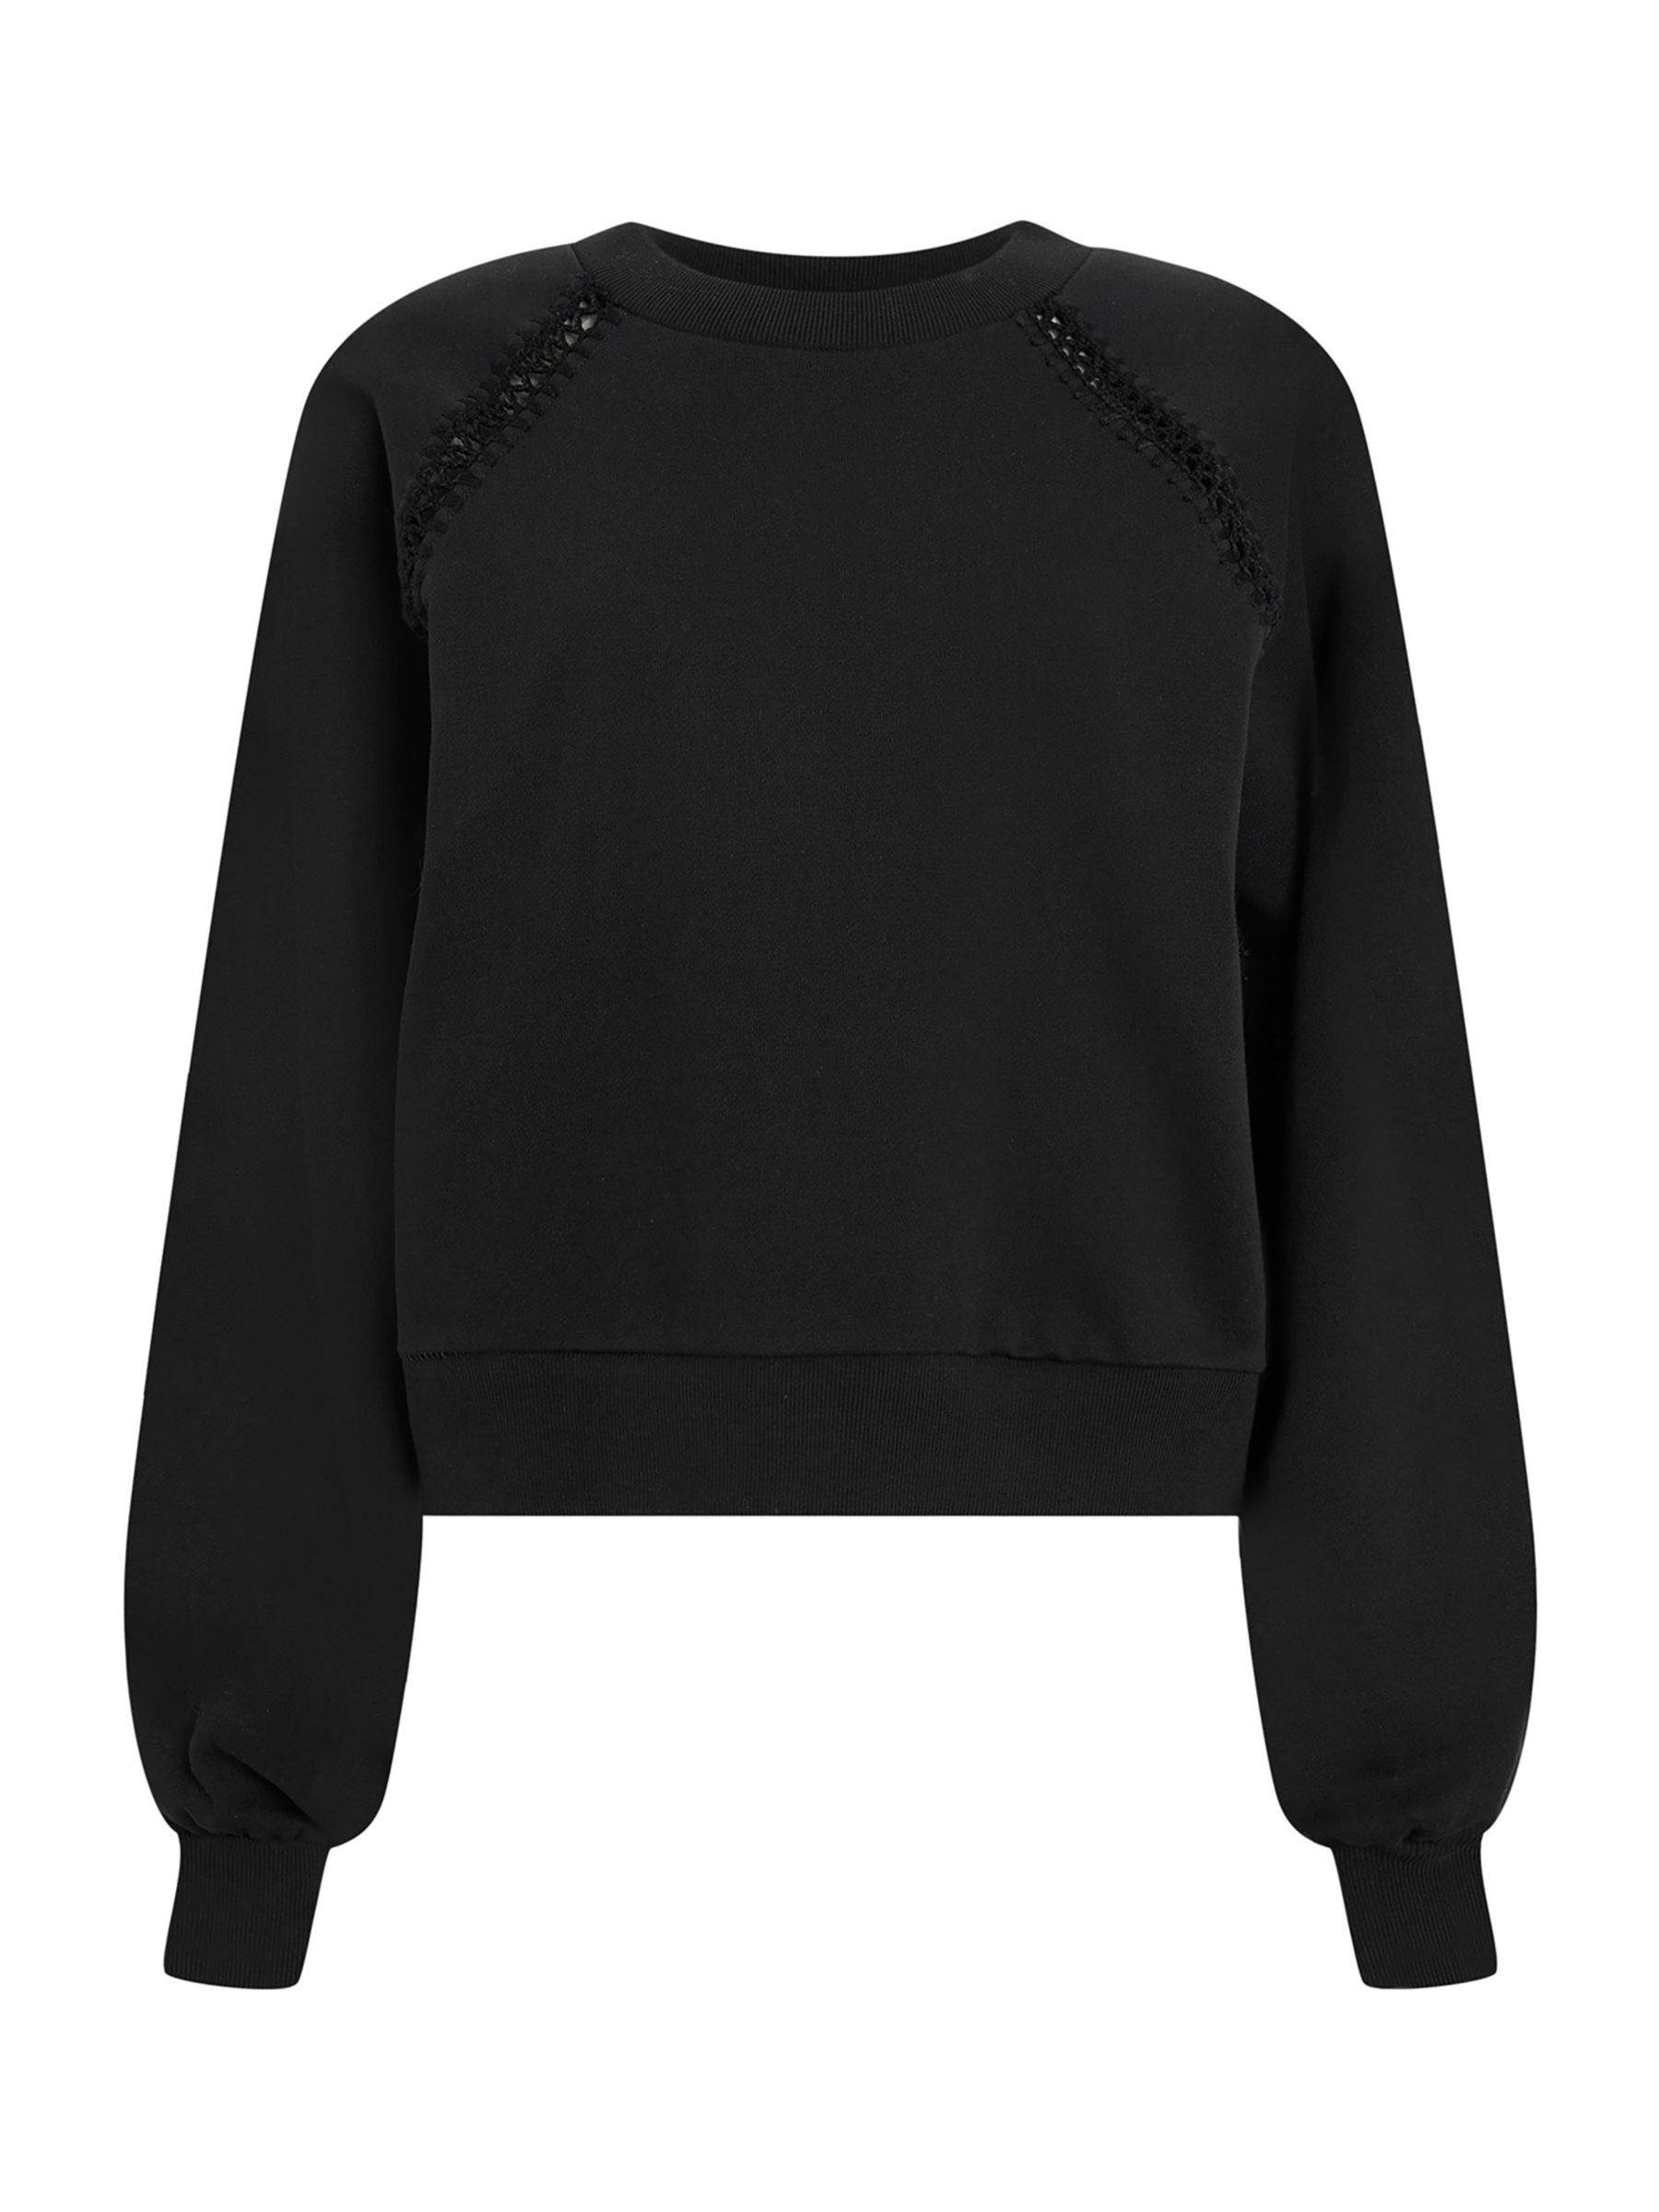 AllSaints Ewelina Sweatshirt, Black, L